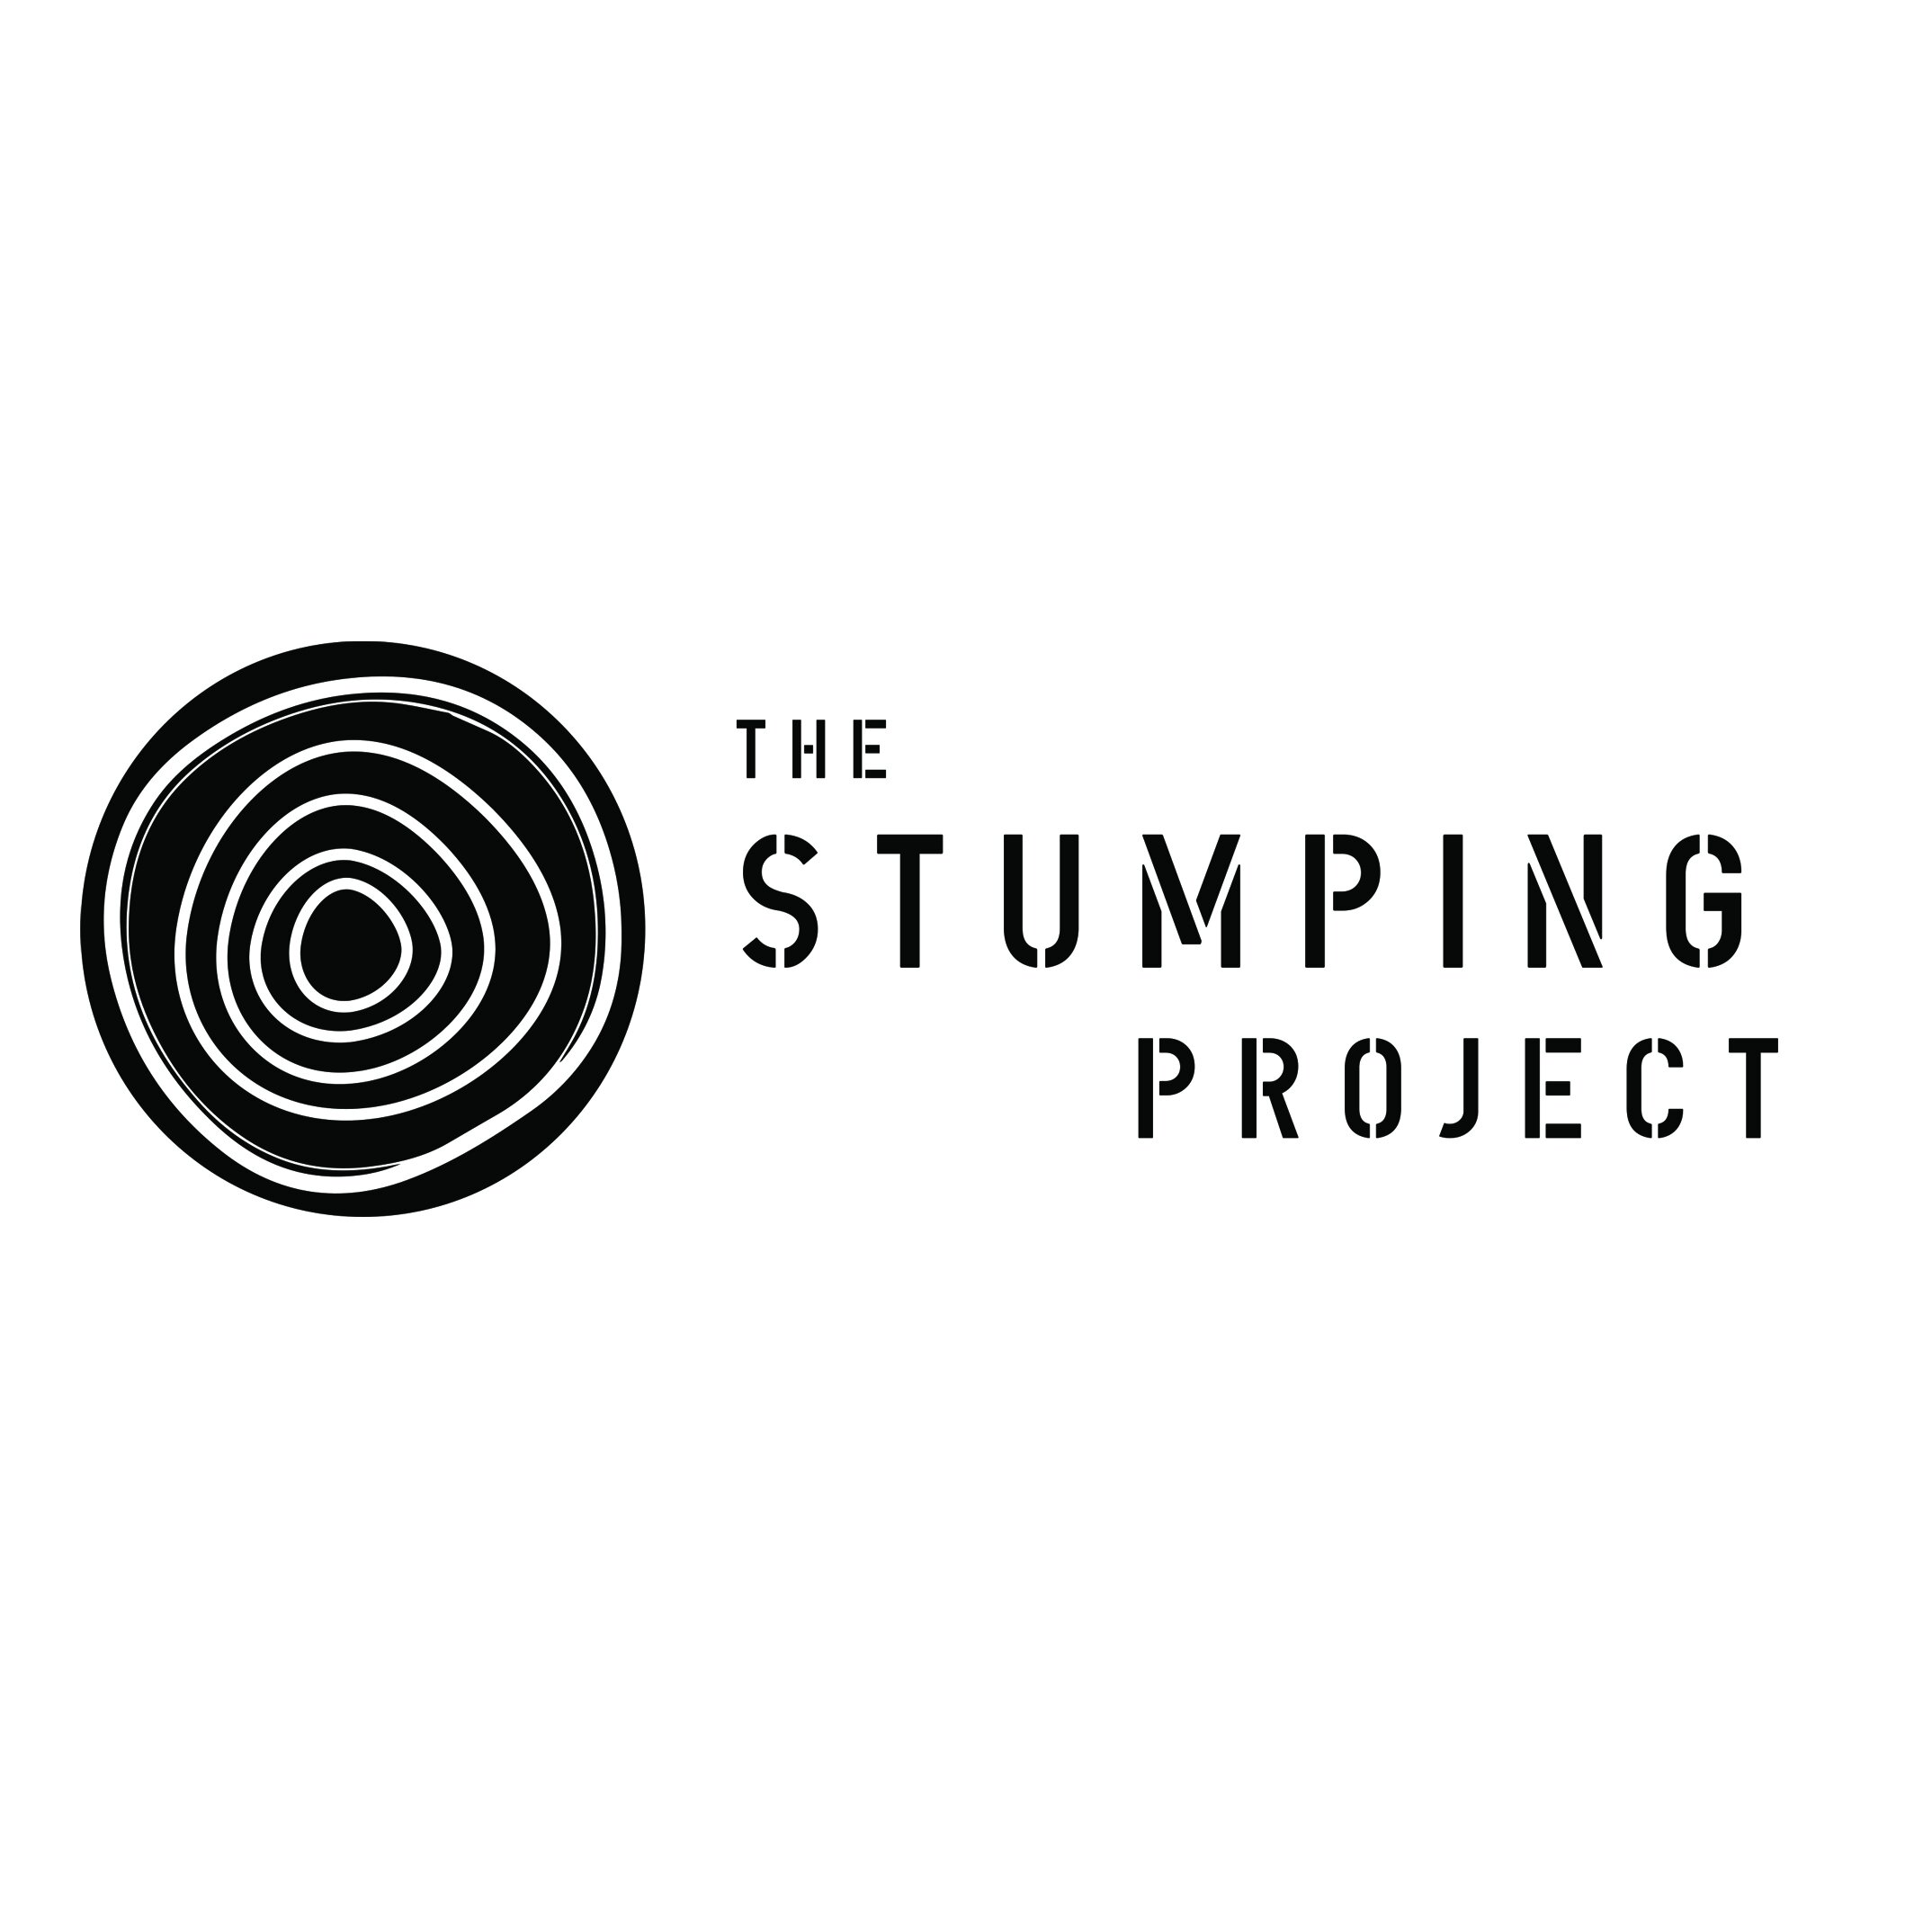 Stumping-Project-Logo.psd square.jpg